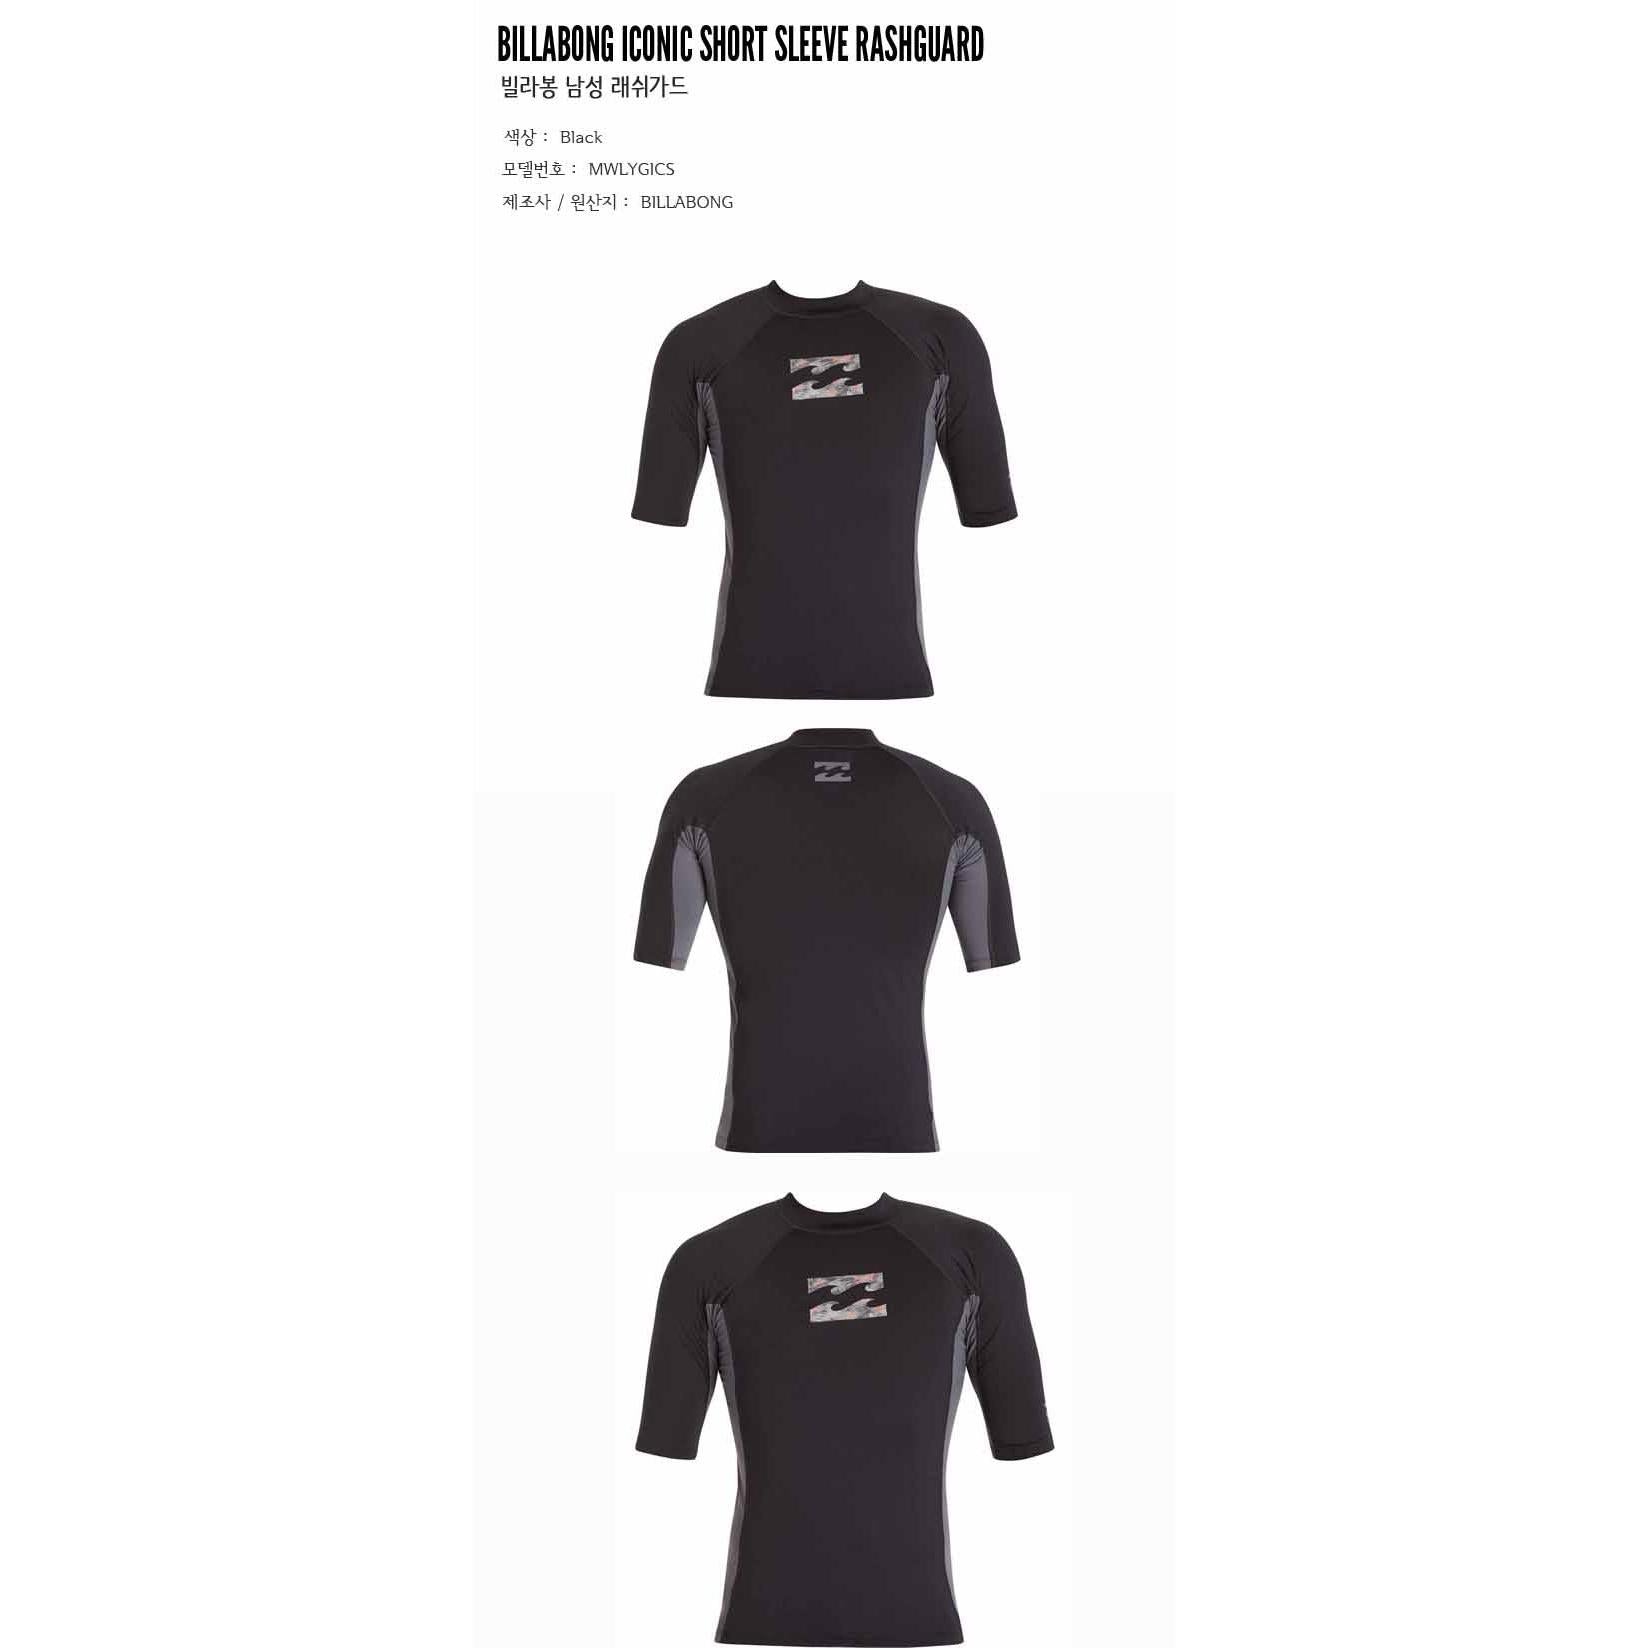 BILLABONG Iconic Short Sleeve Rashguard Black MWLYGICS.